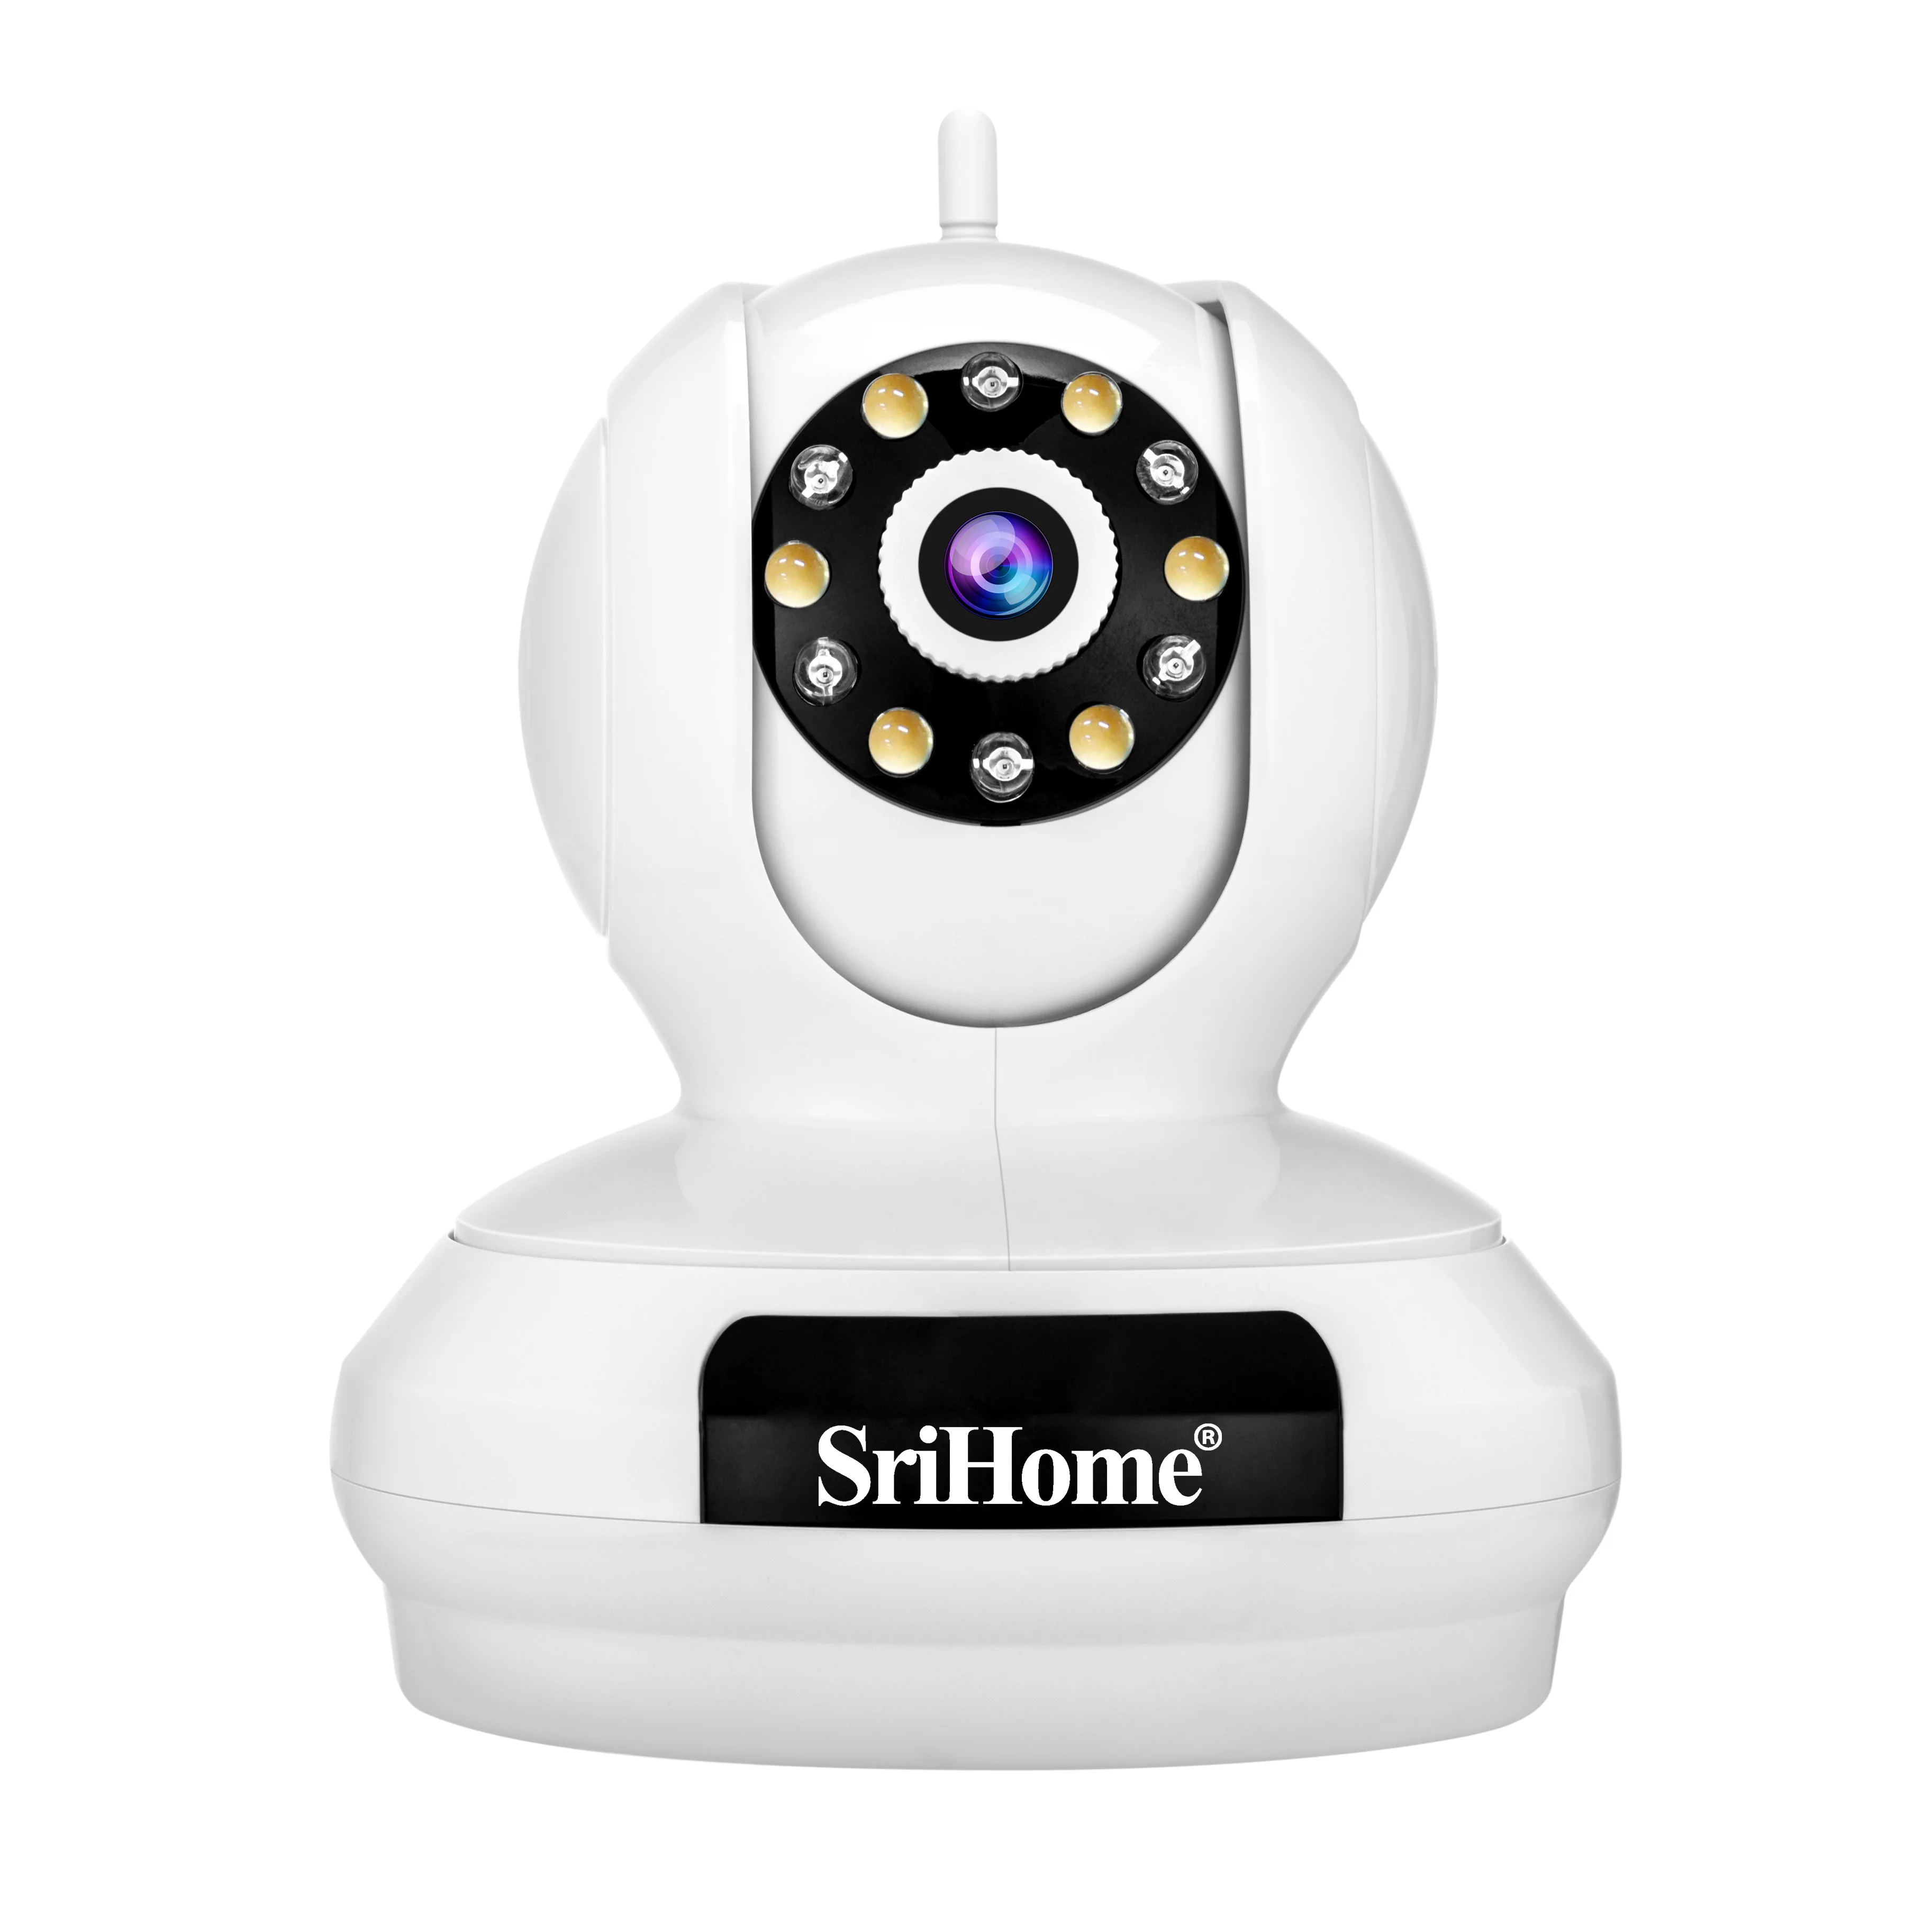 Sricam SP019 5.0 MP IP Wifi Camera 1920P Indoor Security CCTV Mini Smart Home 360° PTZ View Baby Monitor Two Way Audio - купить по